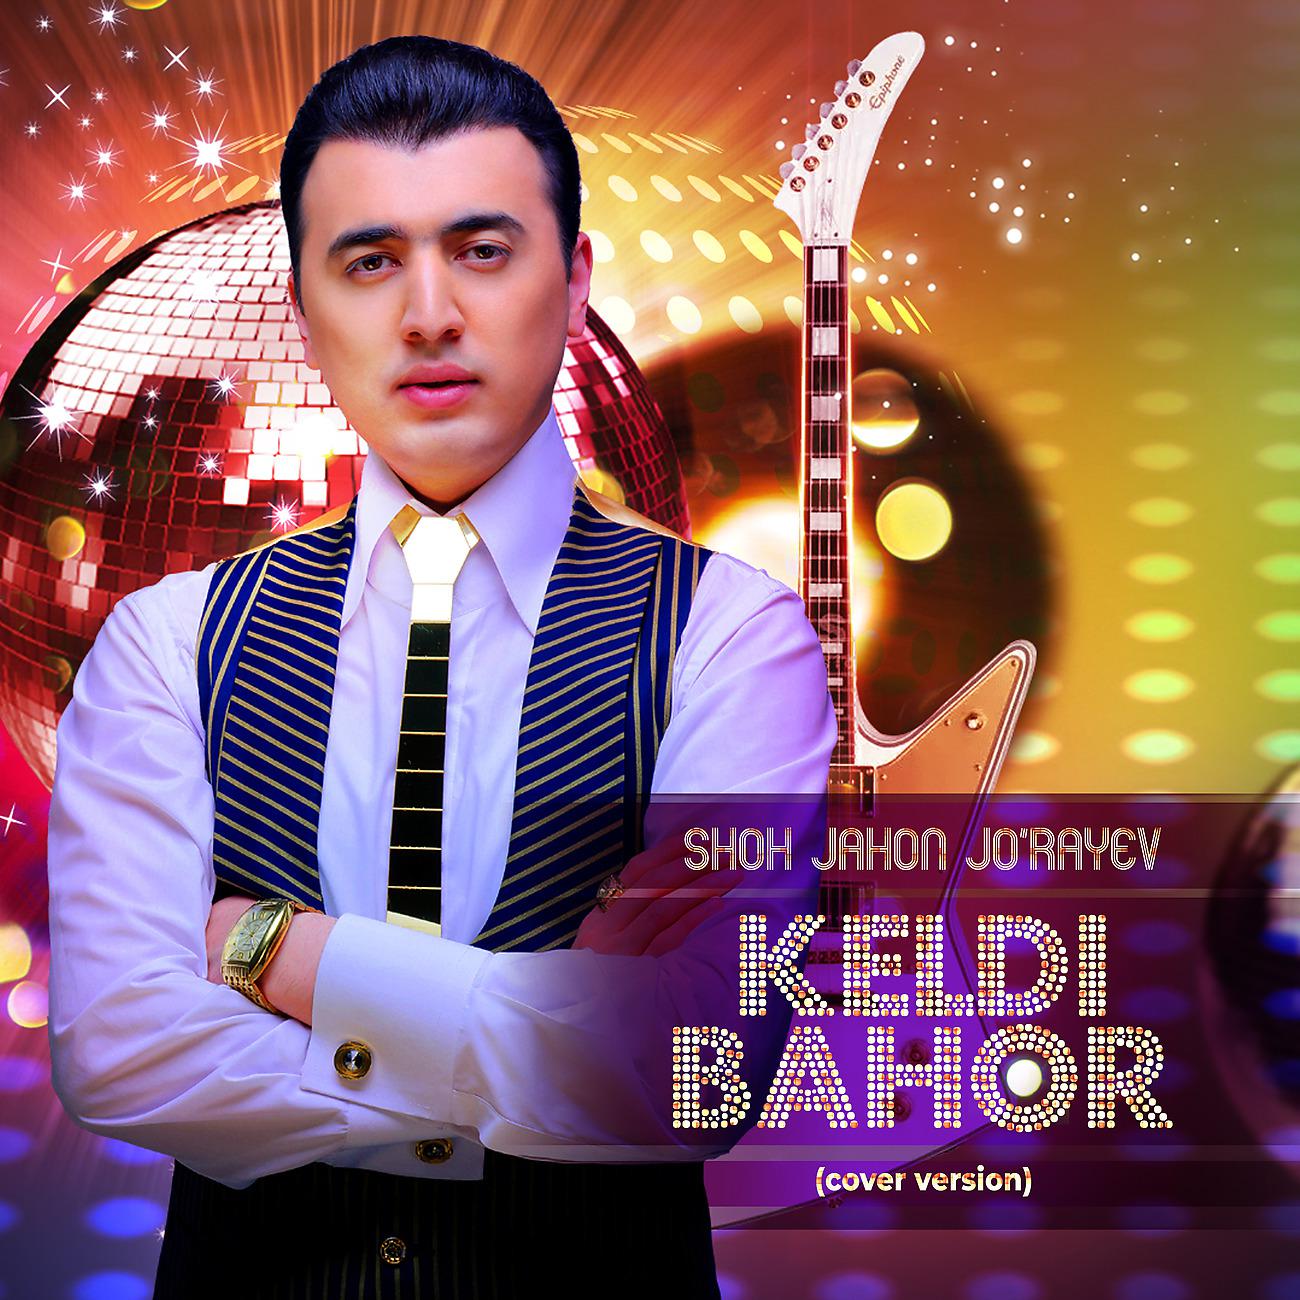 Постер альбома Keldi bahor